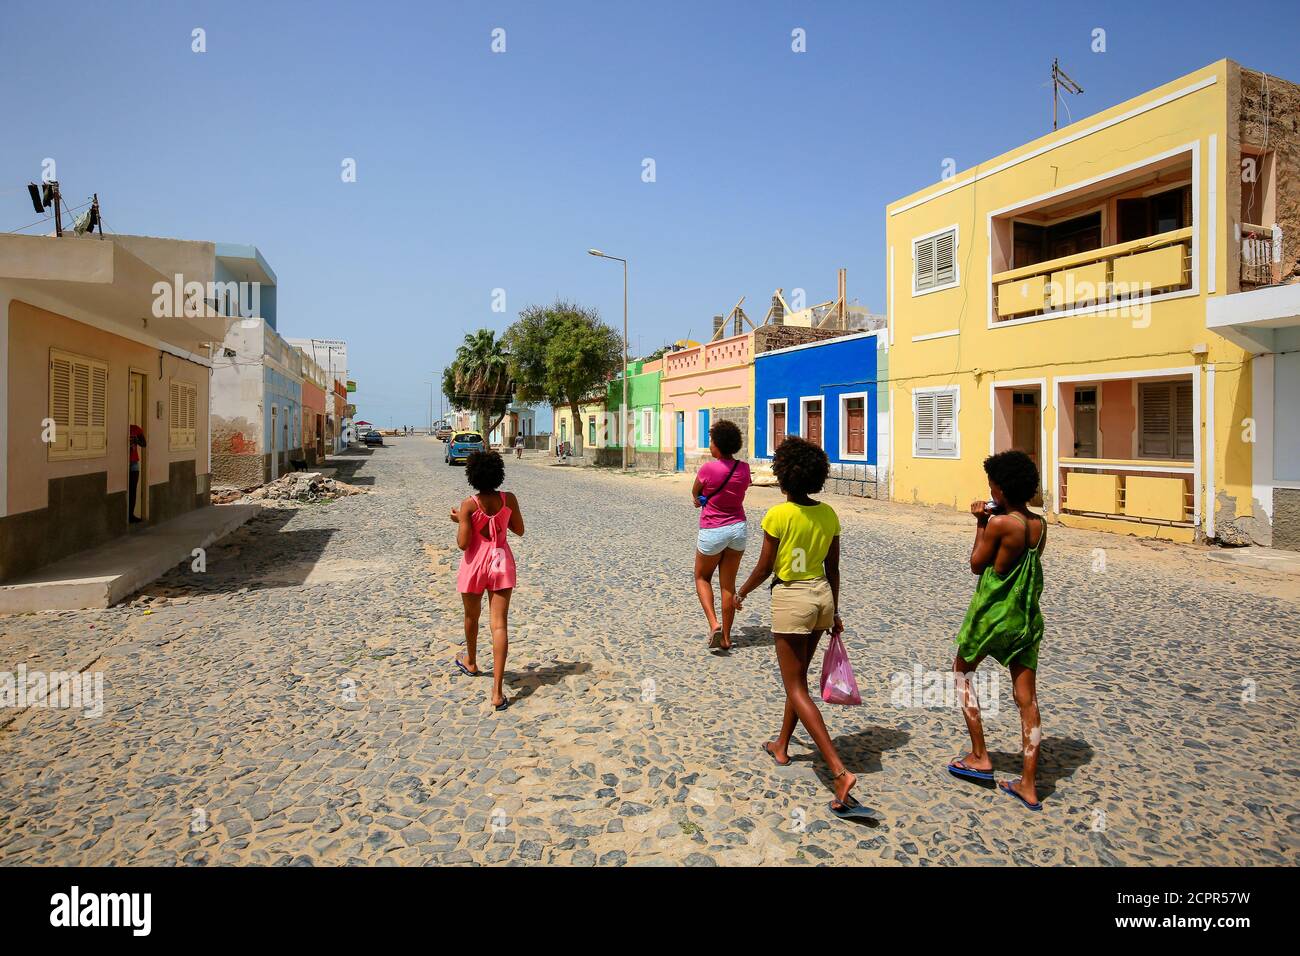 Sal Rei, Boa Vista, Cape Verde - city view, street scene in the island capital Sal Rei. Stock Photo